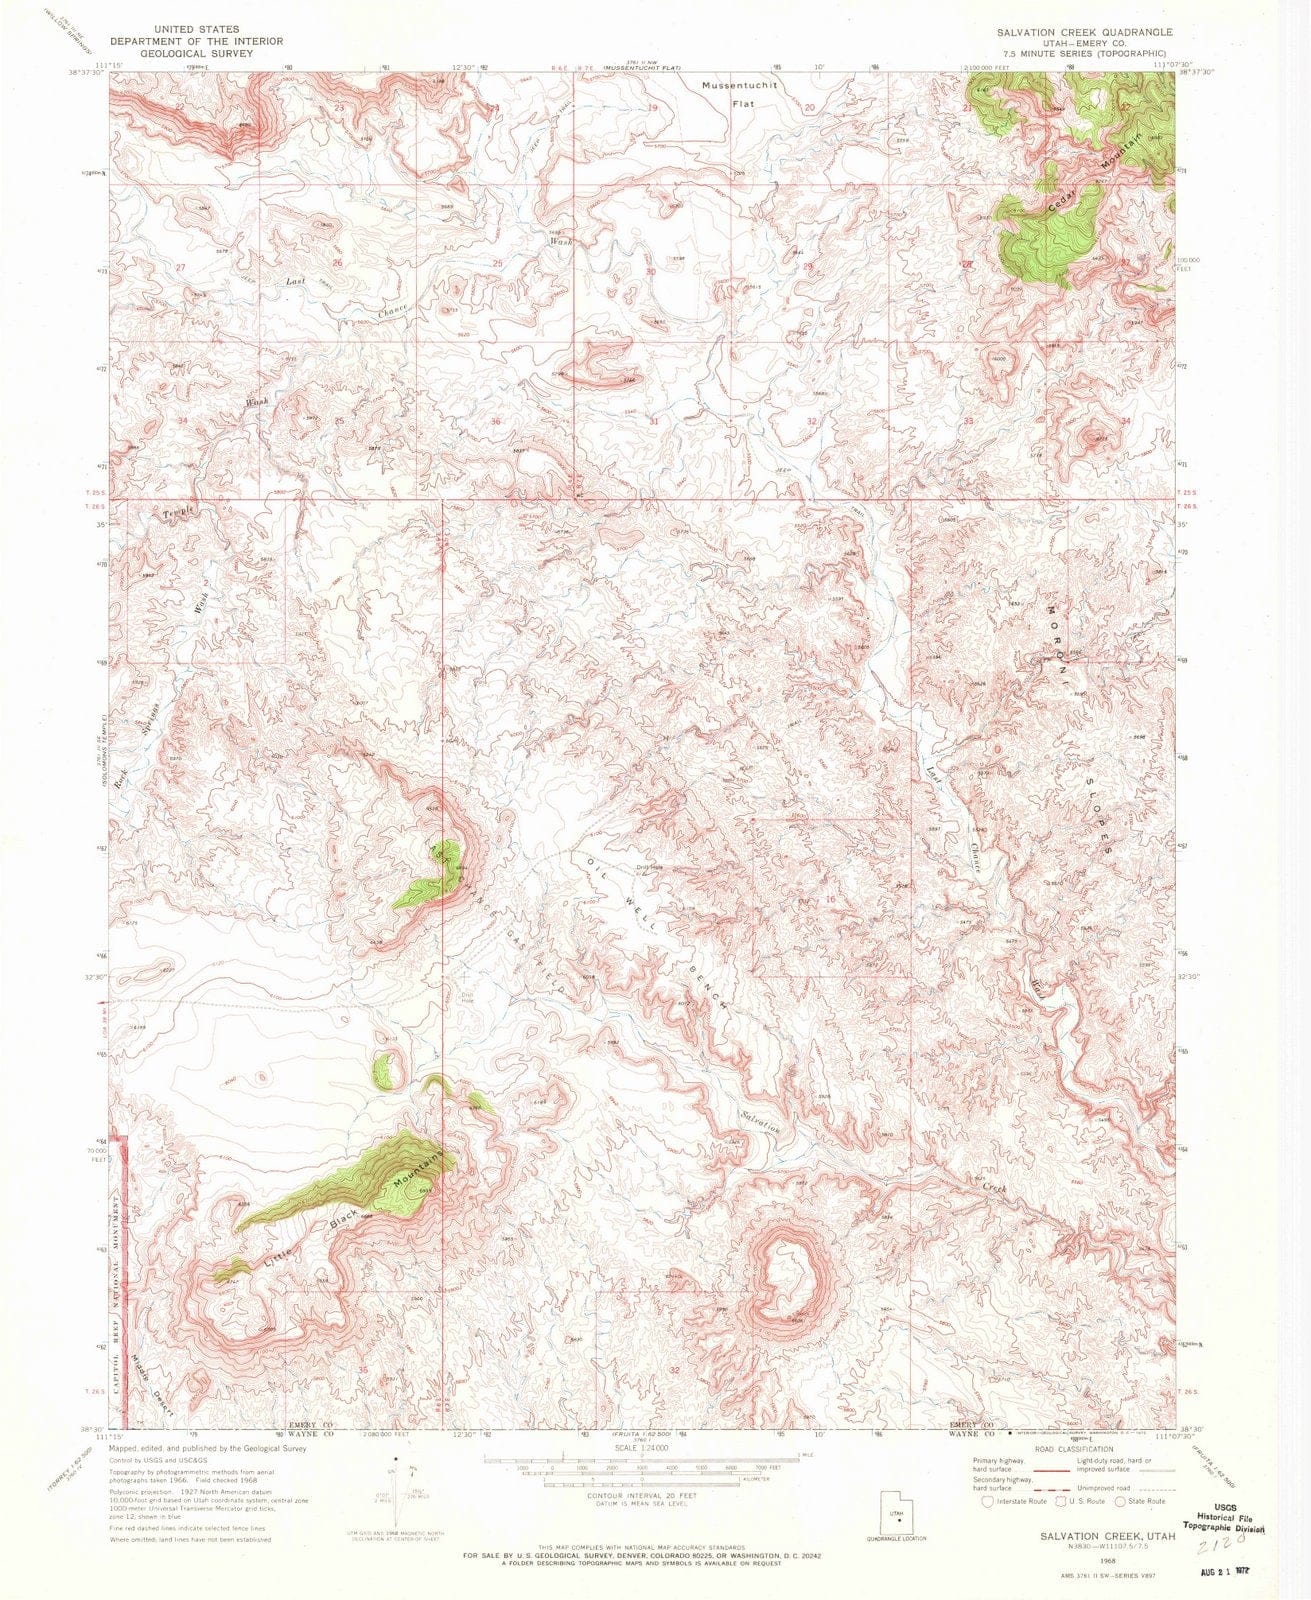 1968 Salvation Creek, UT - Utah - USGS Topographic Map